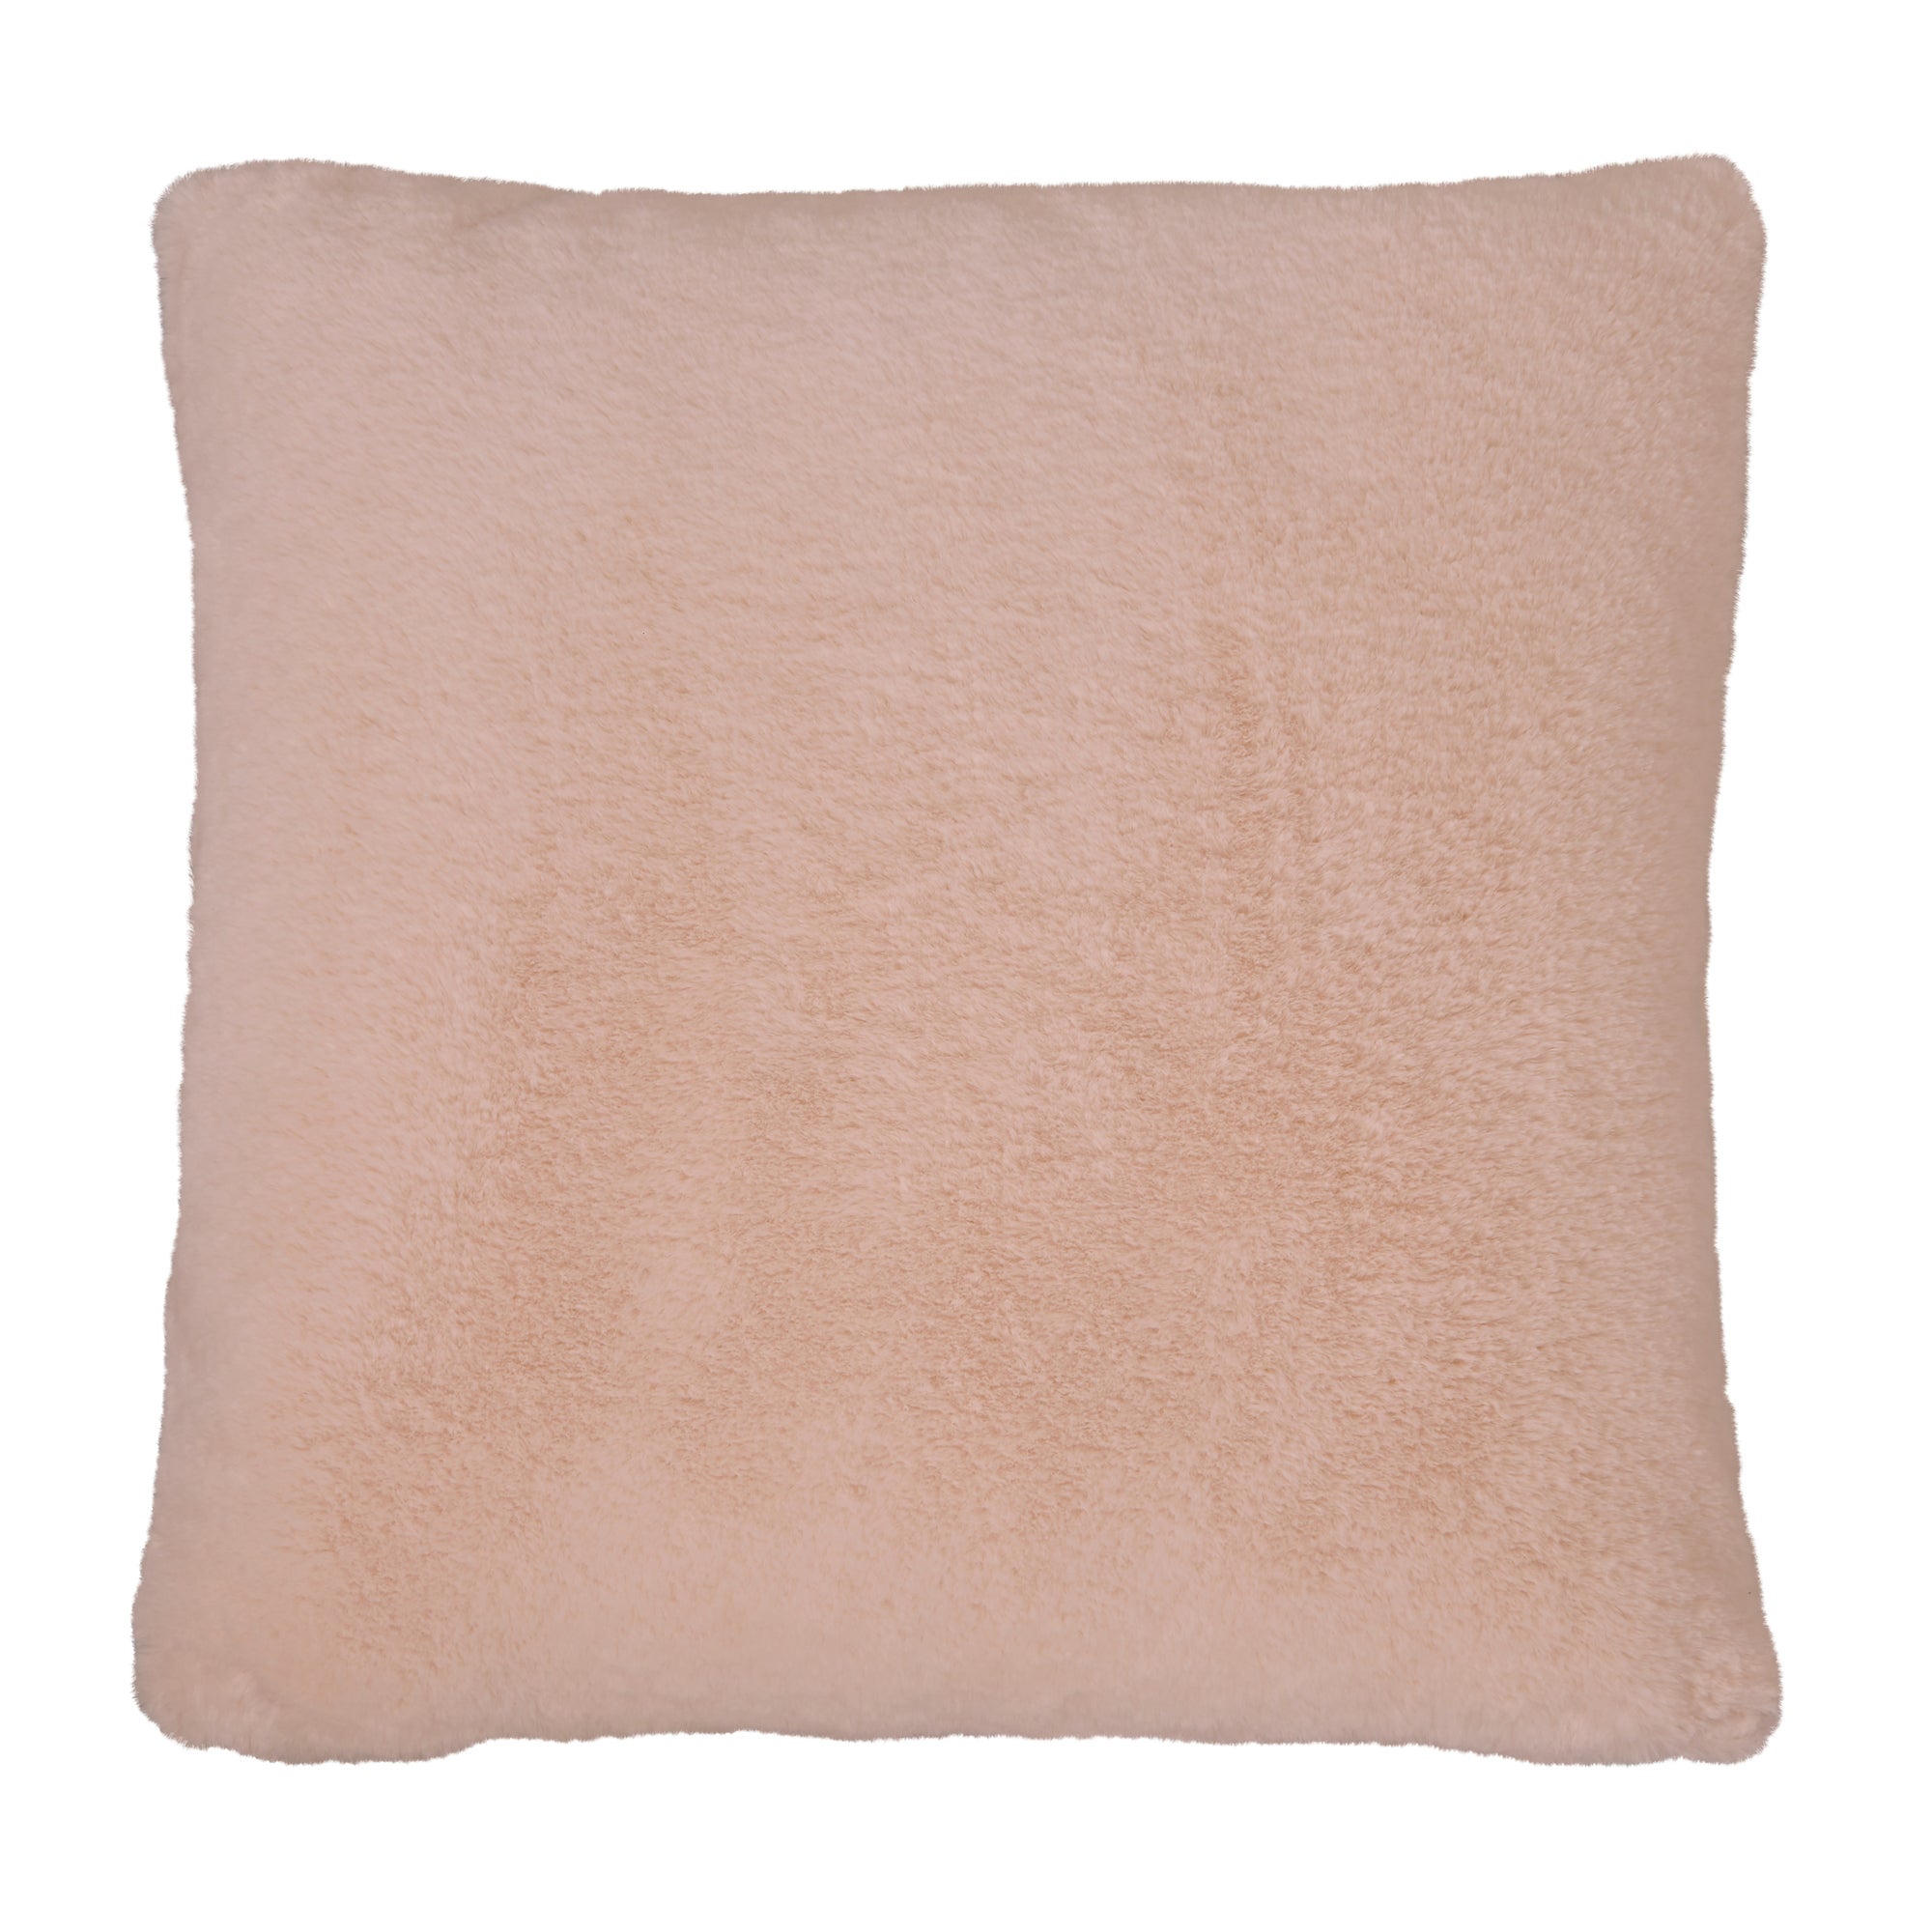 Adeline Faux Fur Cushion Cover Blush